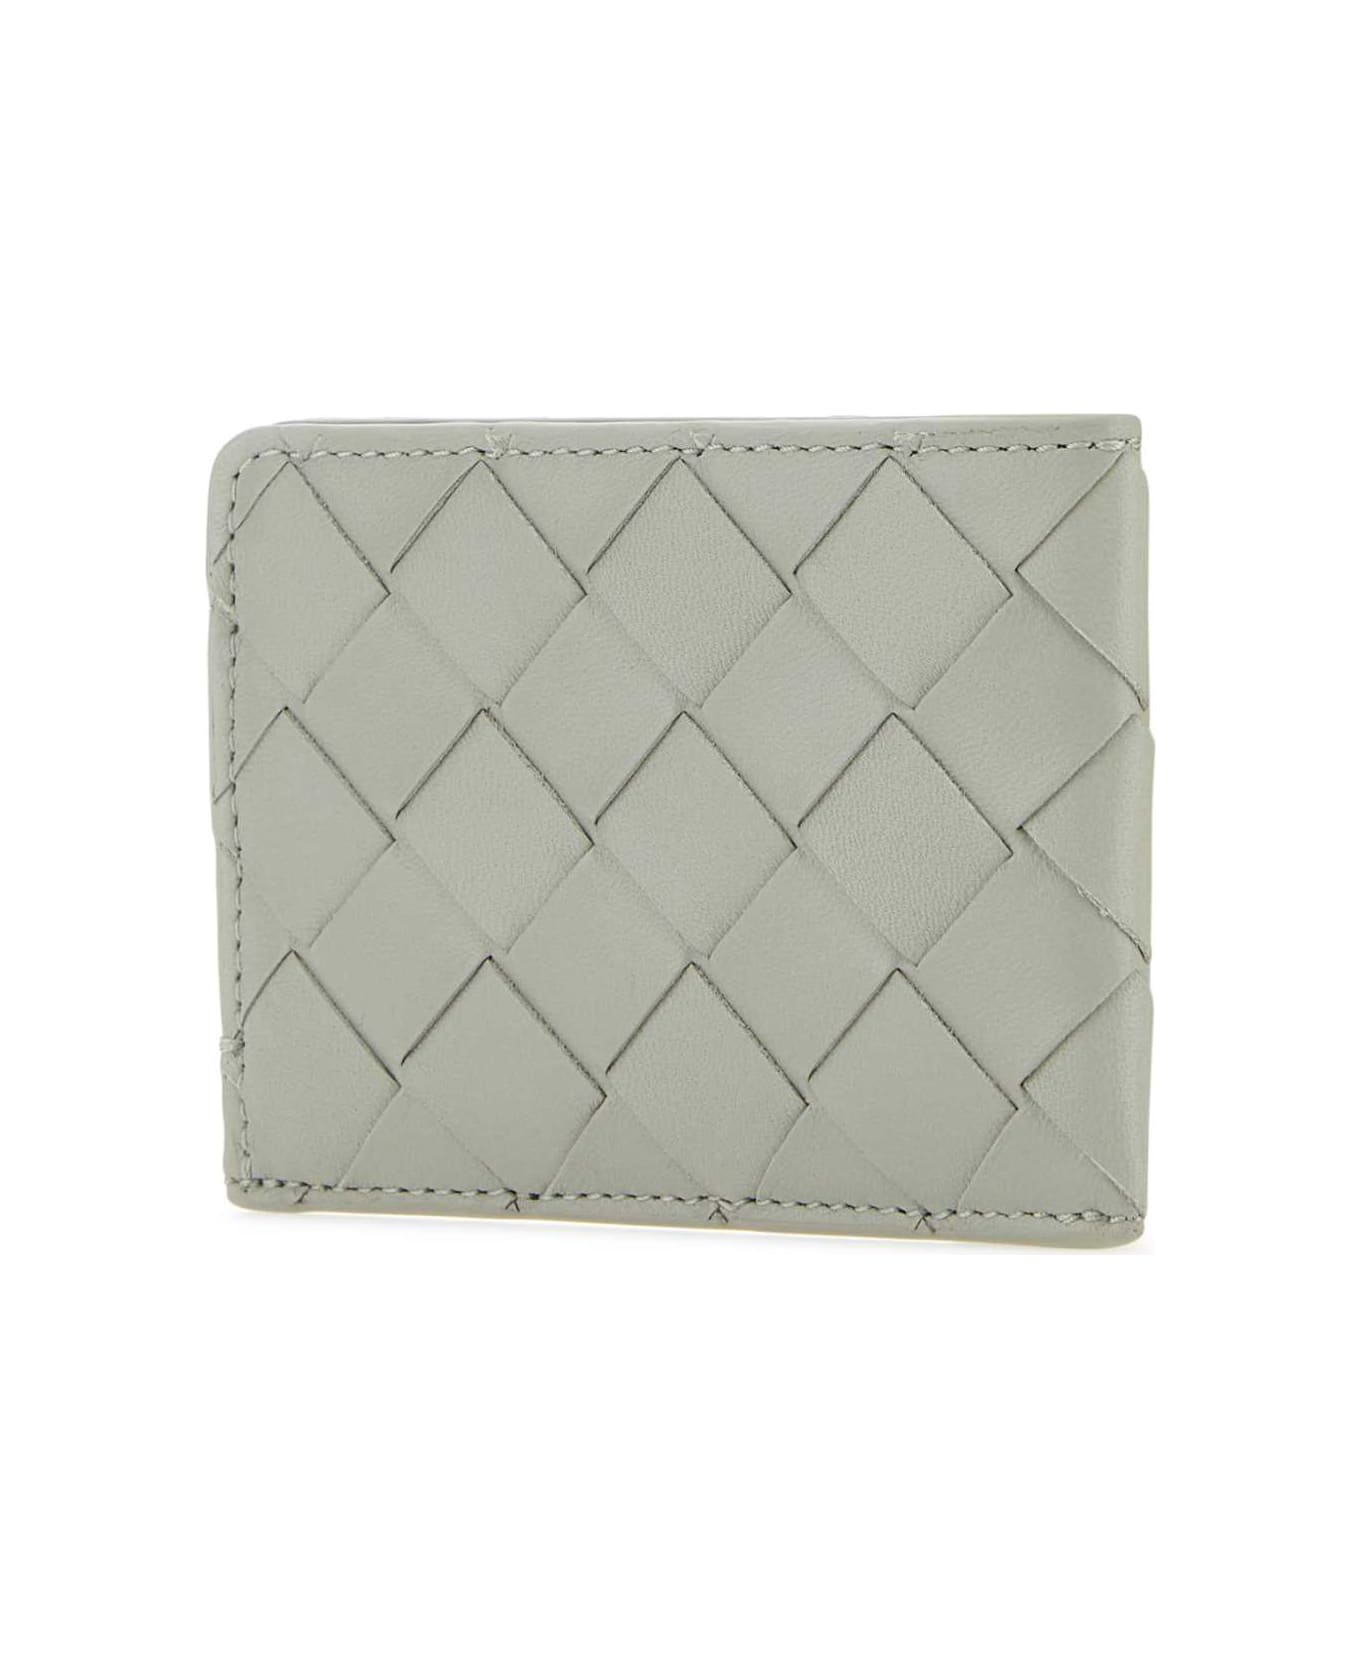 Bottega Veneta Light Grey Leather Card Holder - AGATEGREYGOLD 財布